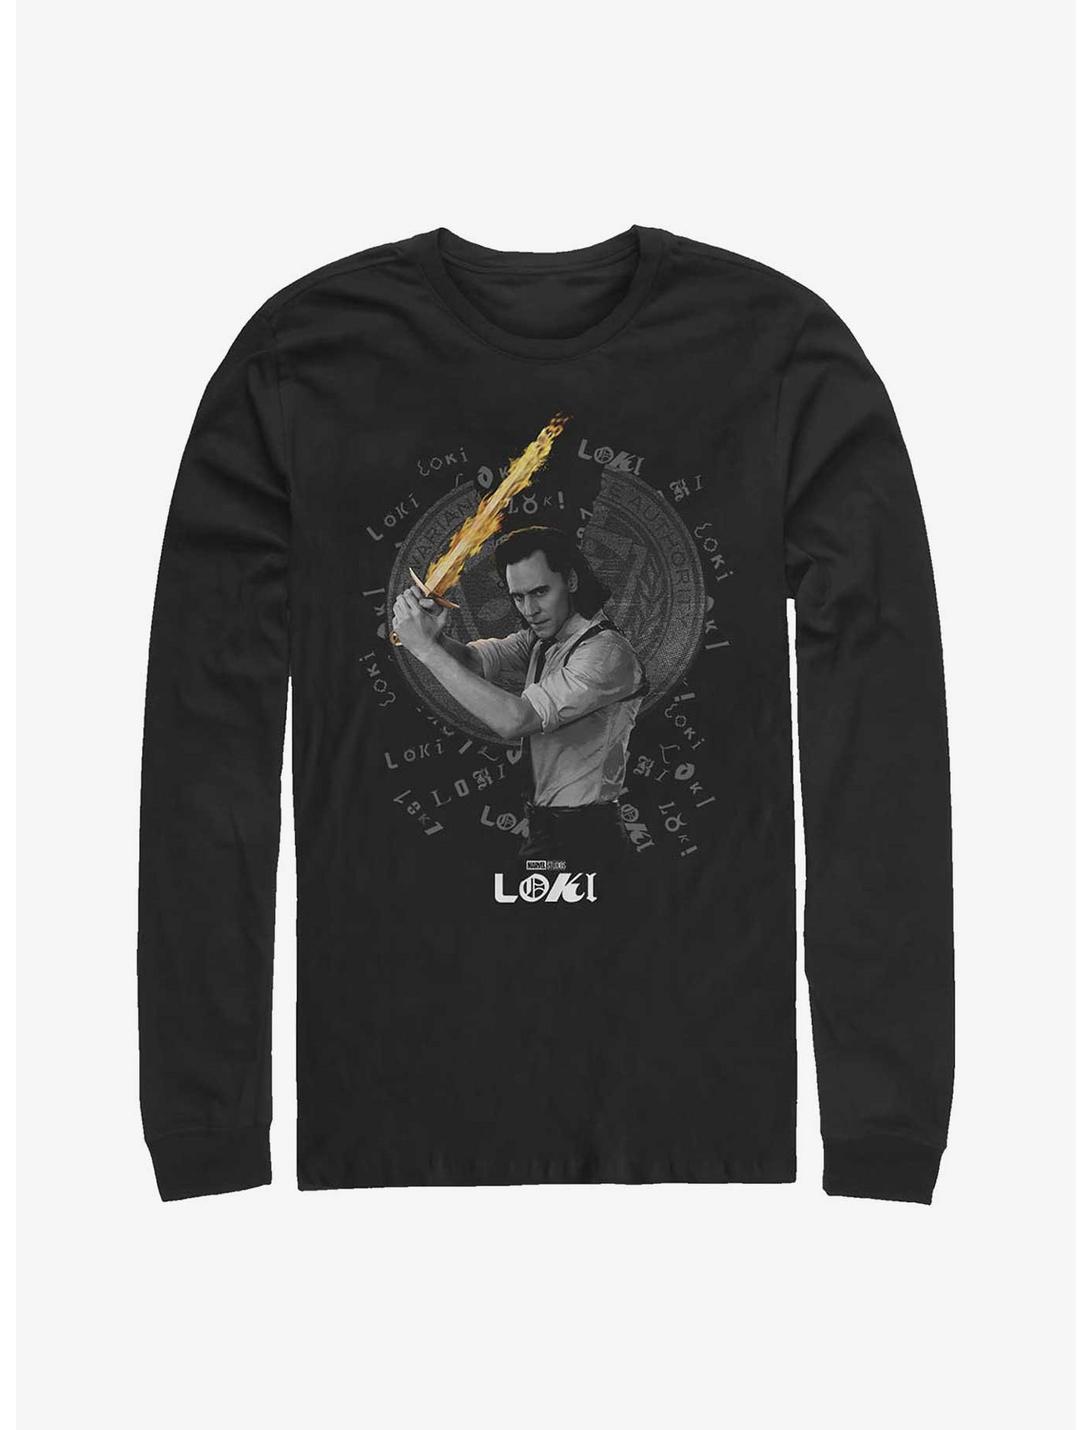 Marvel Loki Laevateinn Sword Long-Sleeve T-Shirt, BLACK, hi-res